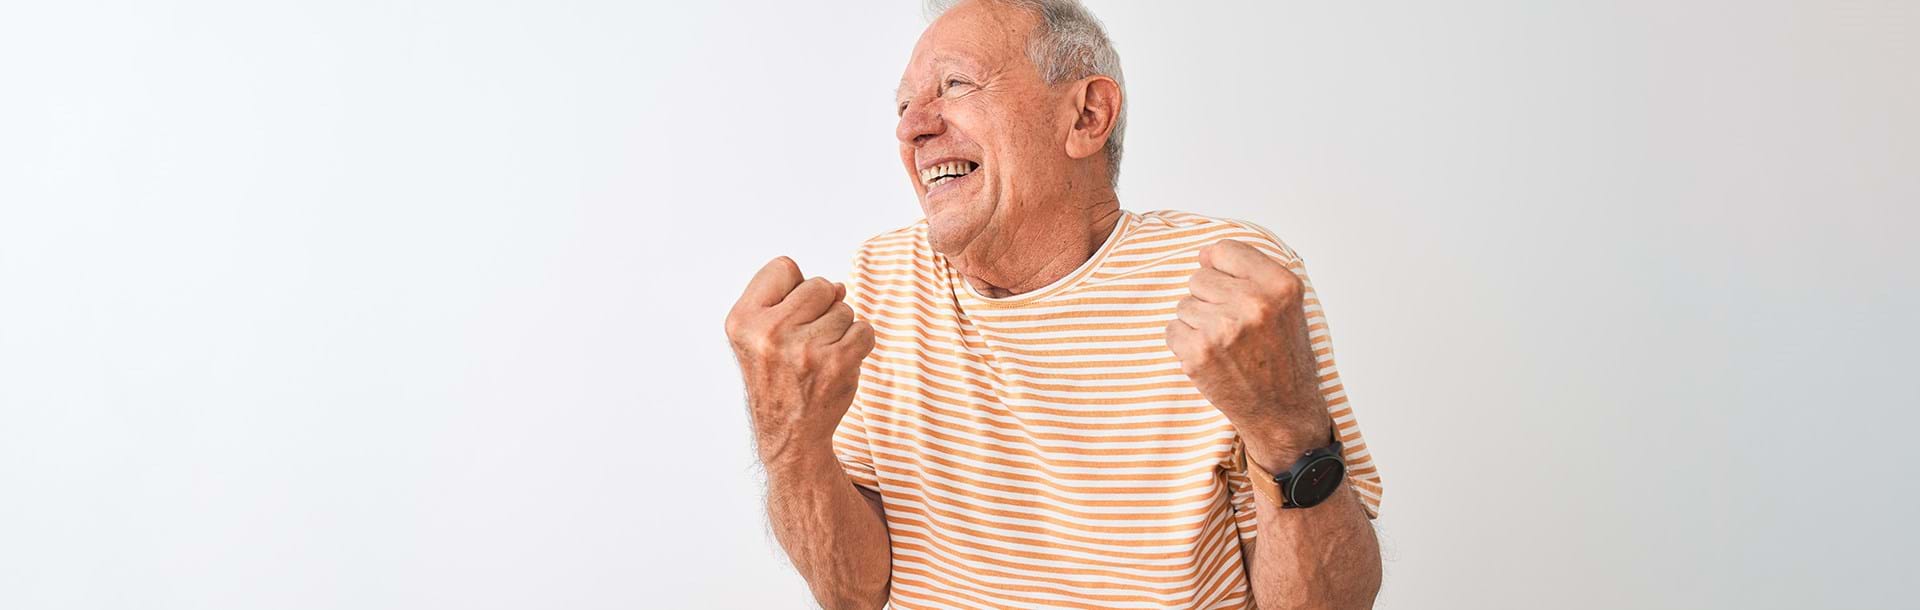 An older man celebrating with a joyful expression